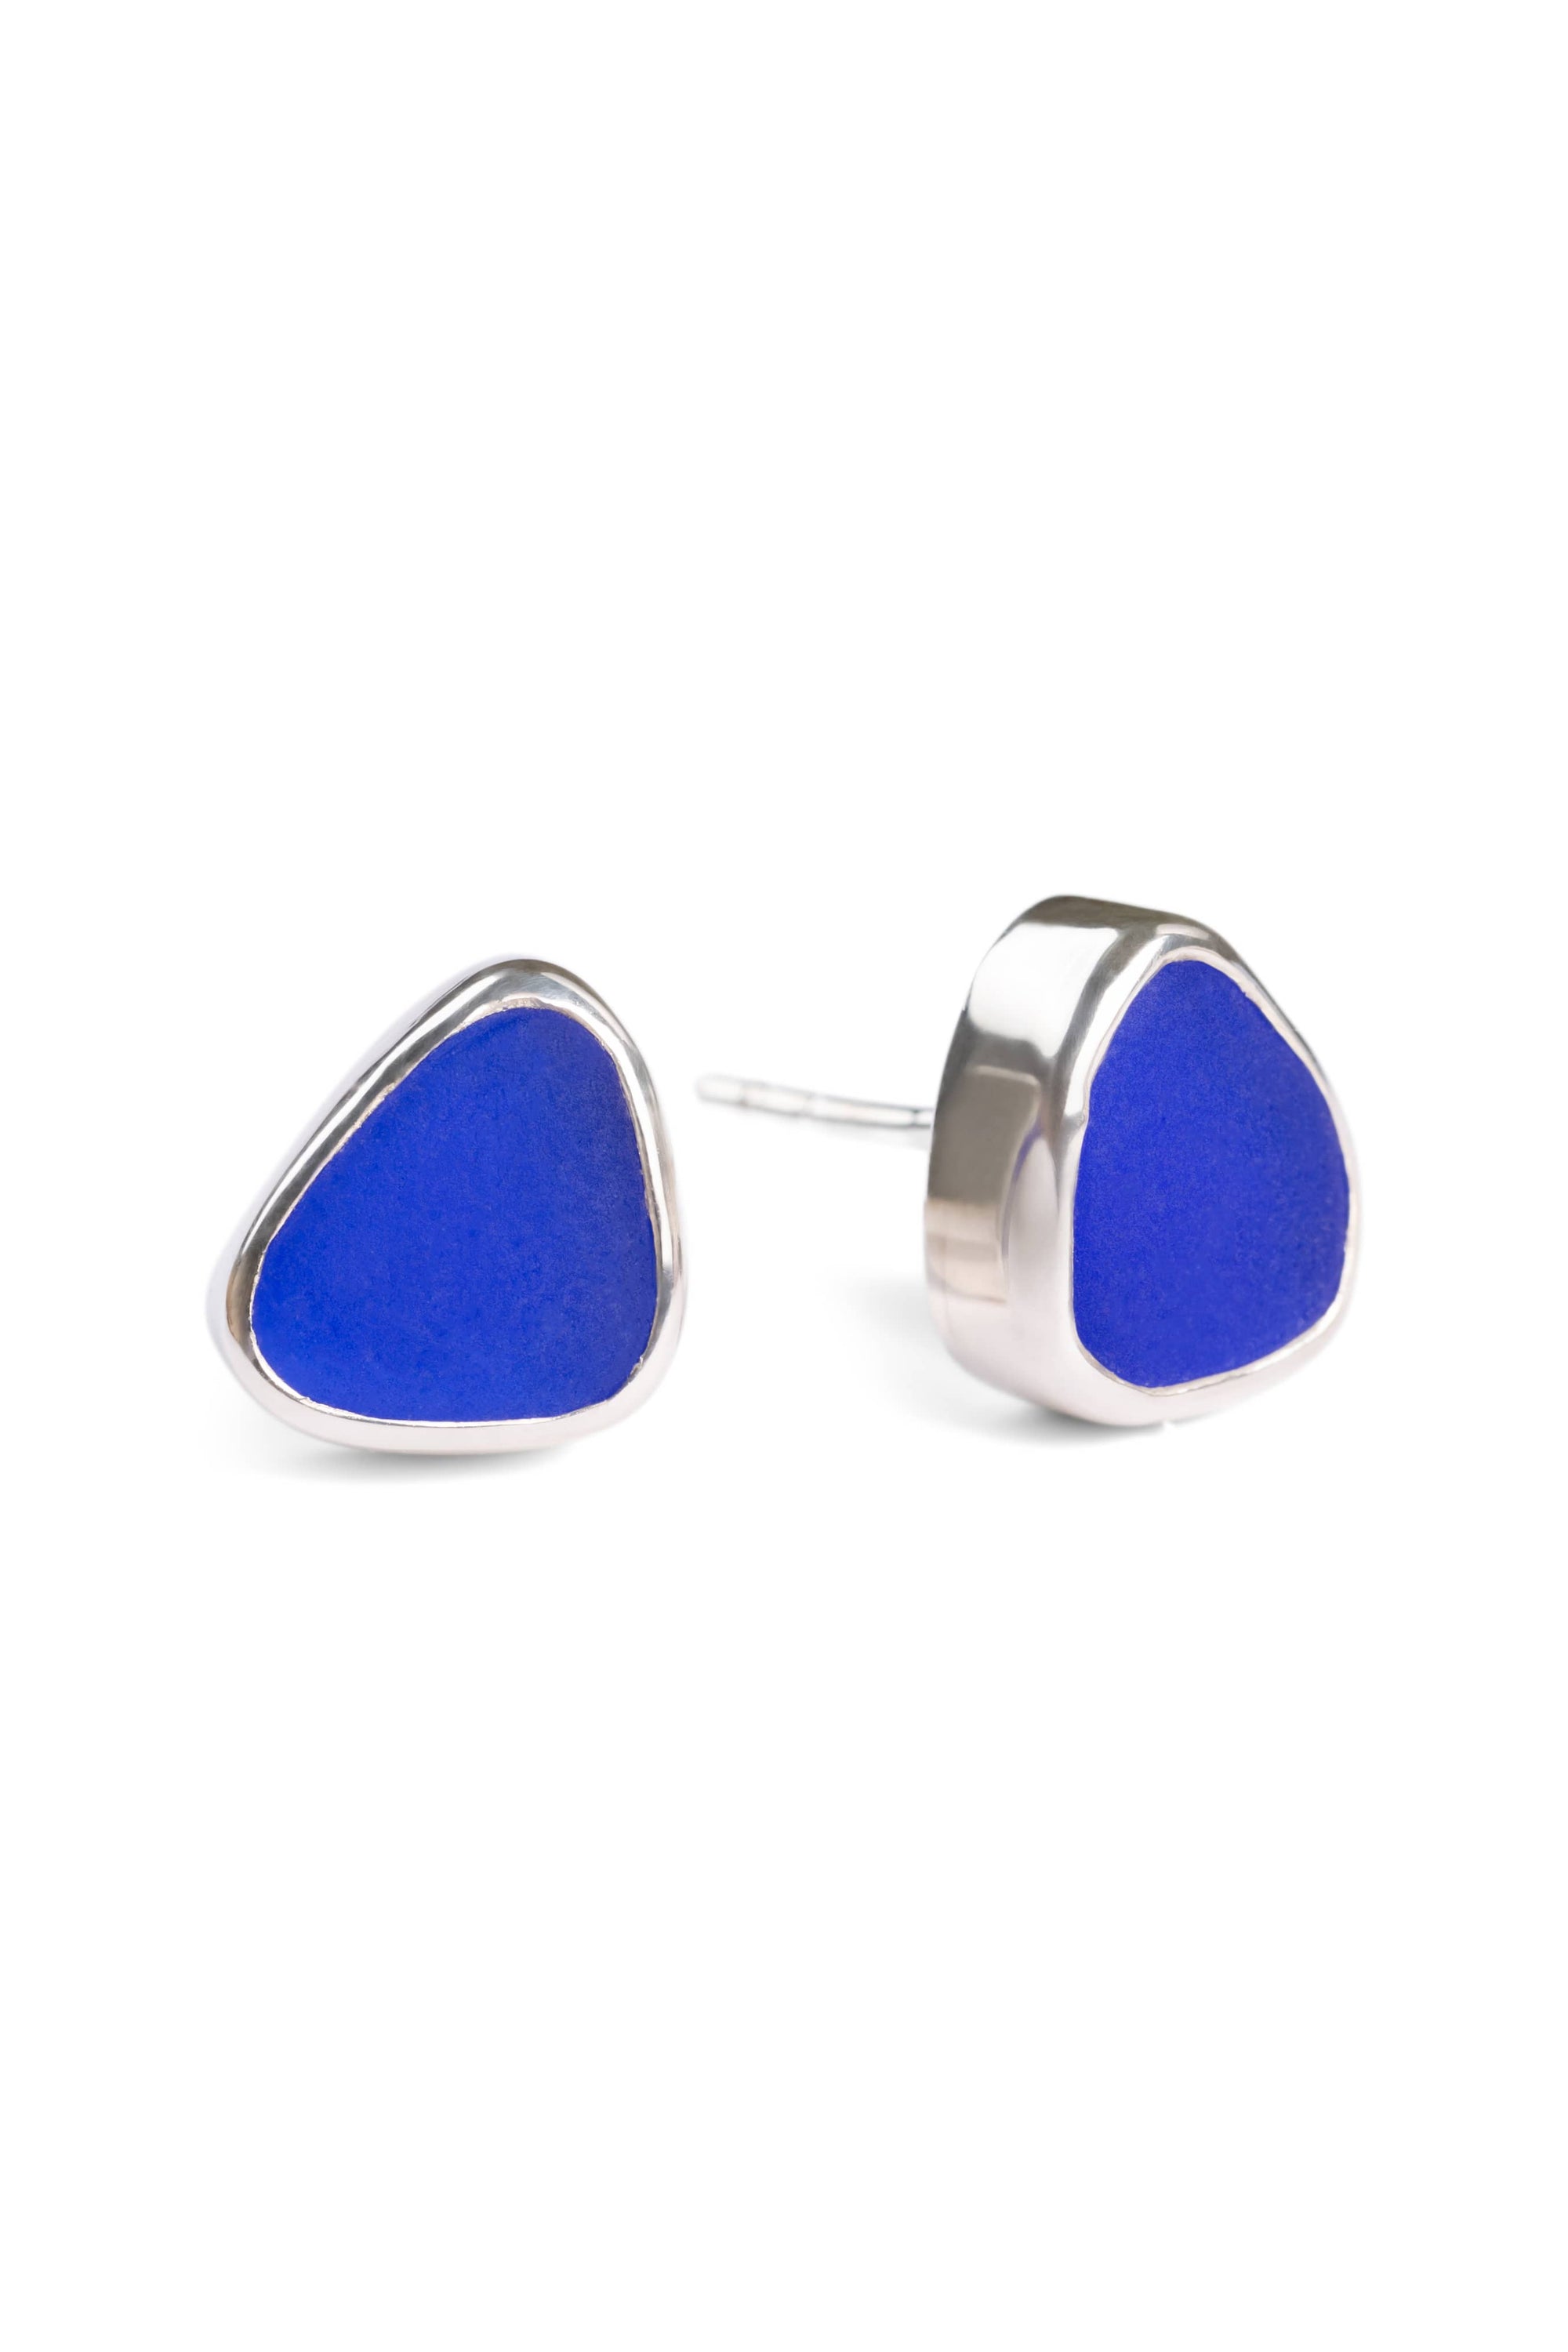 Sea Life Sea Glass Earrings Cobalt Blue